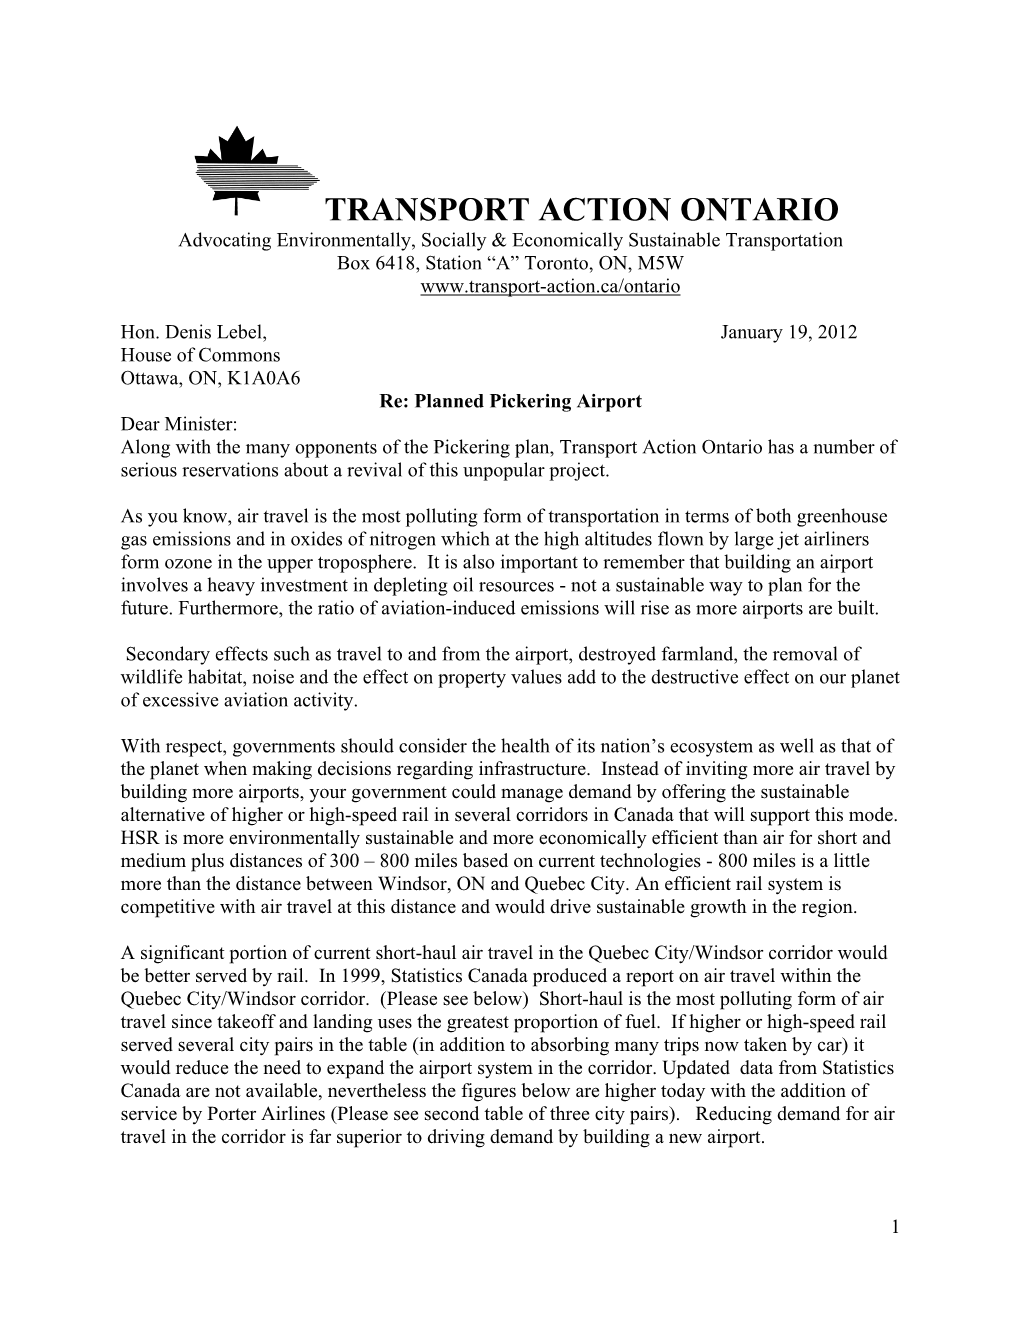 Transport Action Ontario